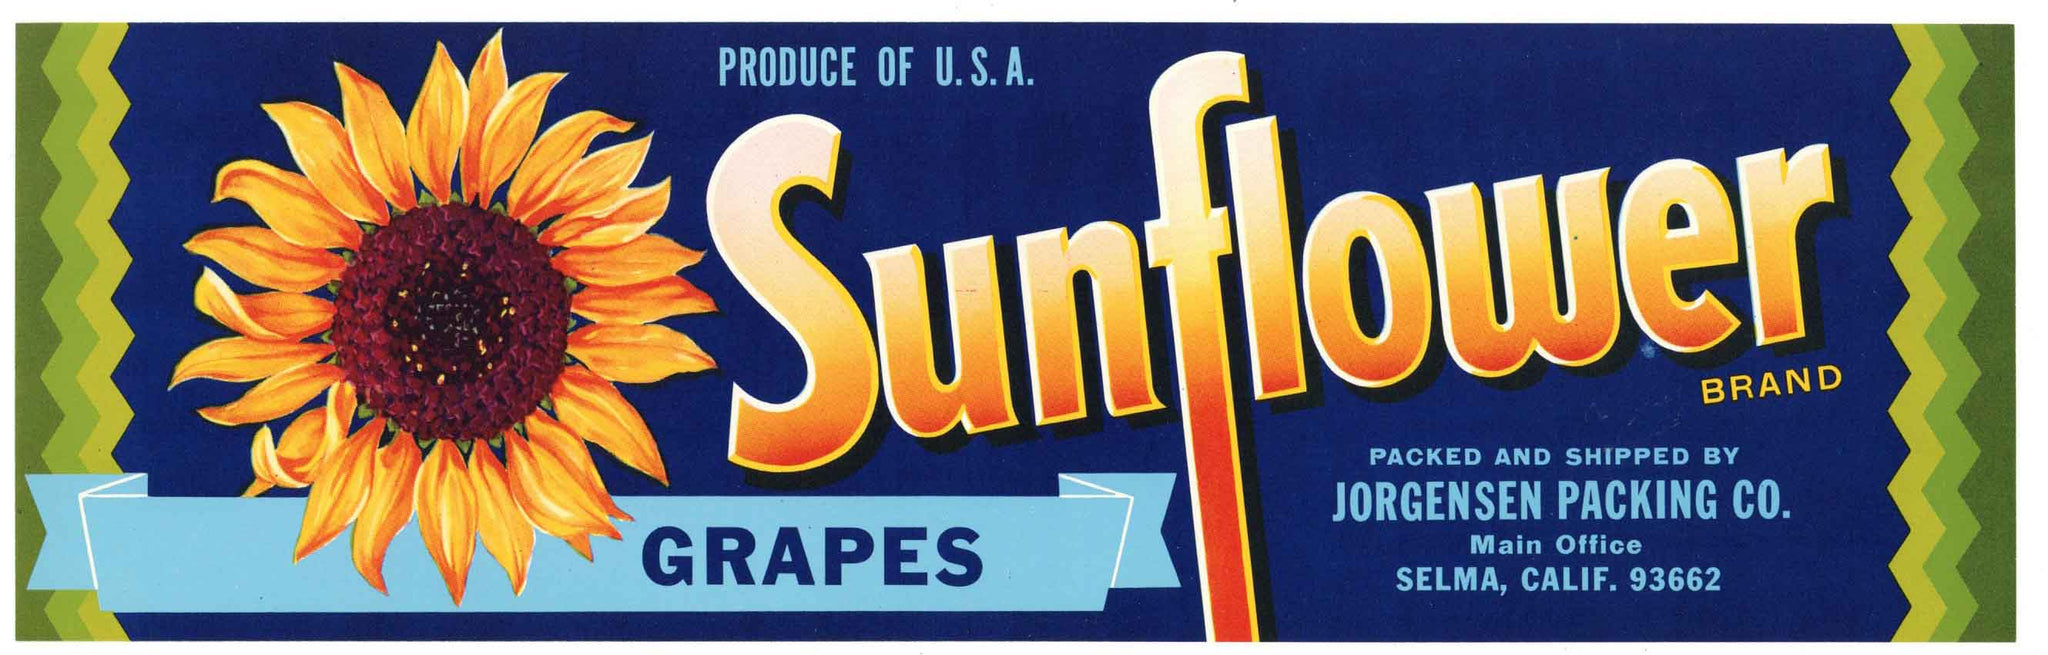 Sunflower Brand Vintage Grape Crate Label